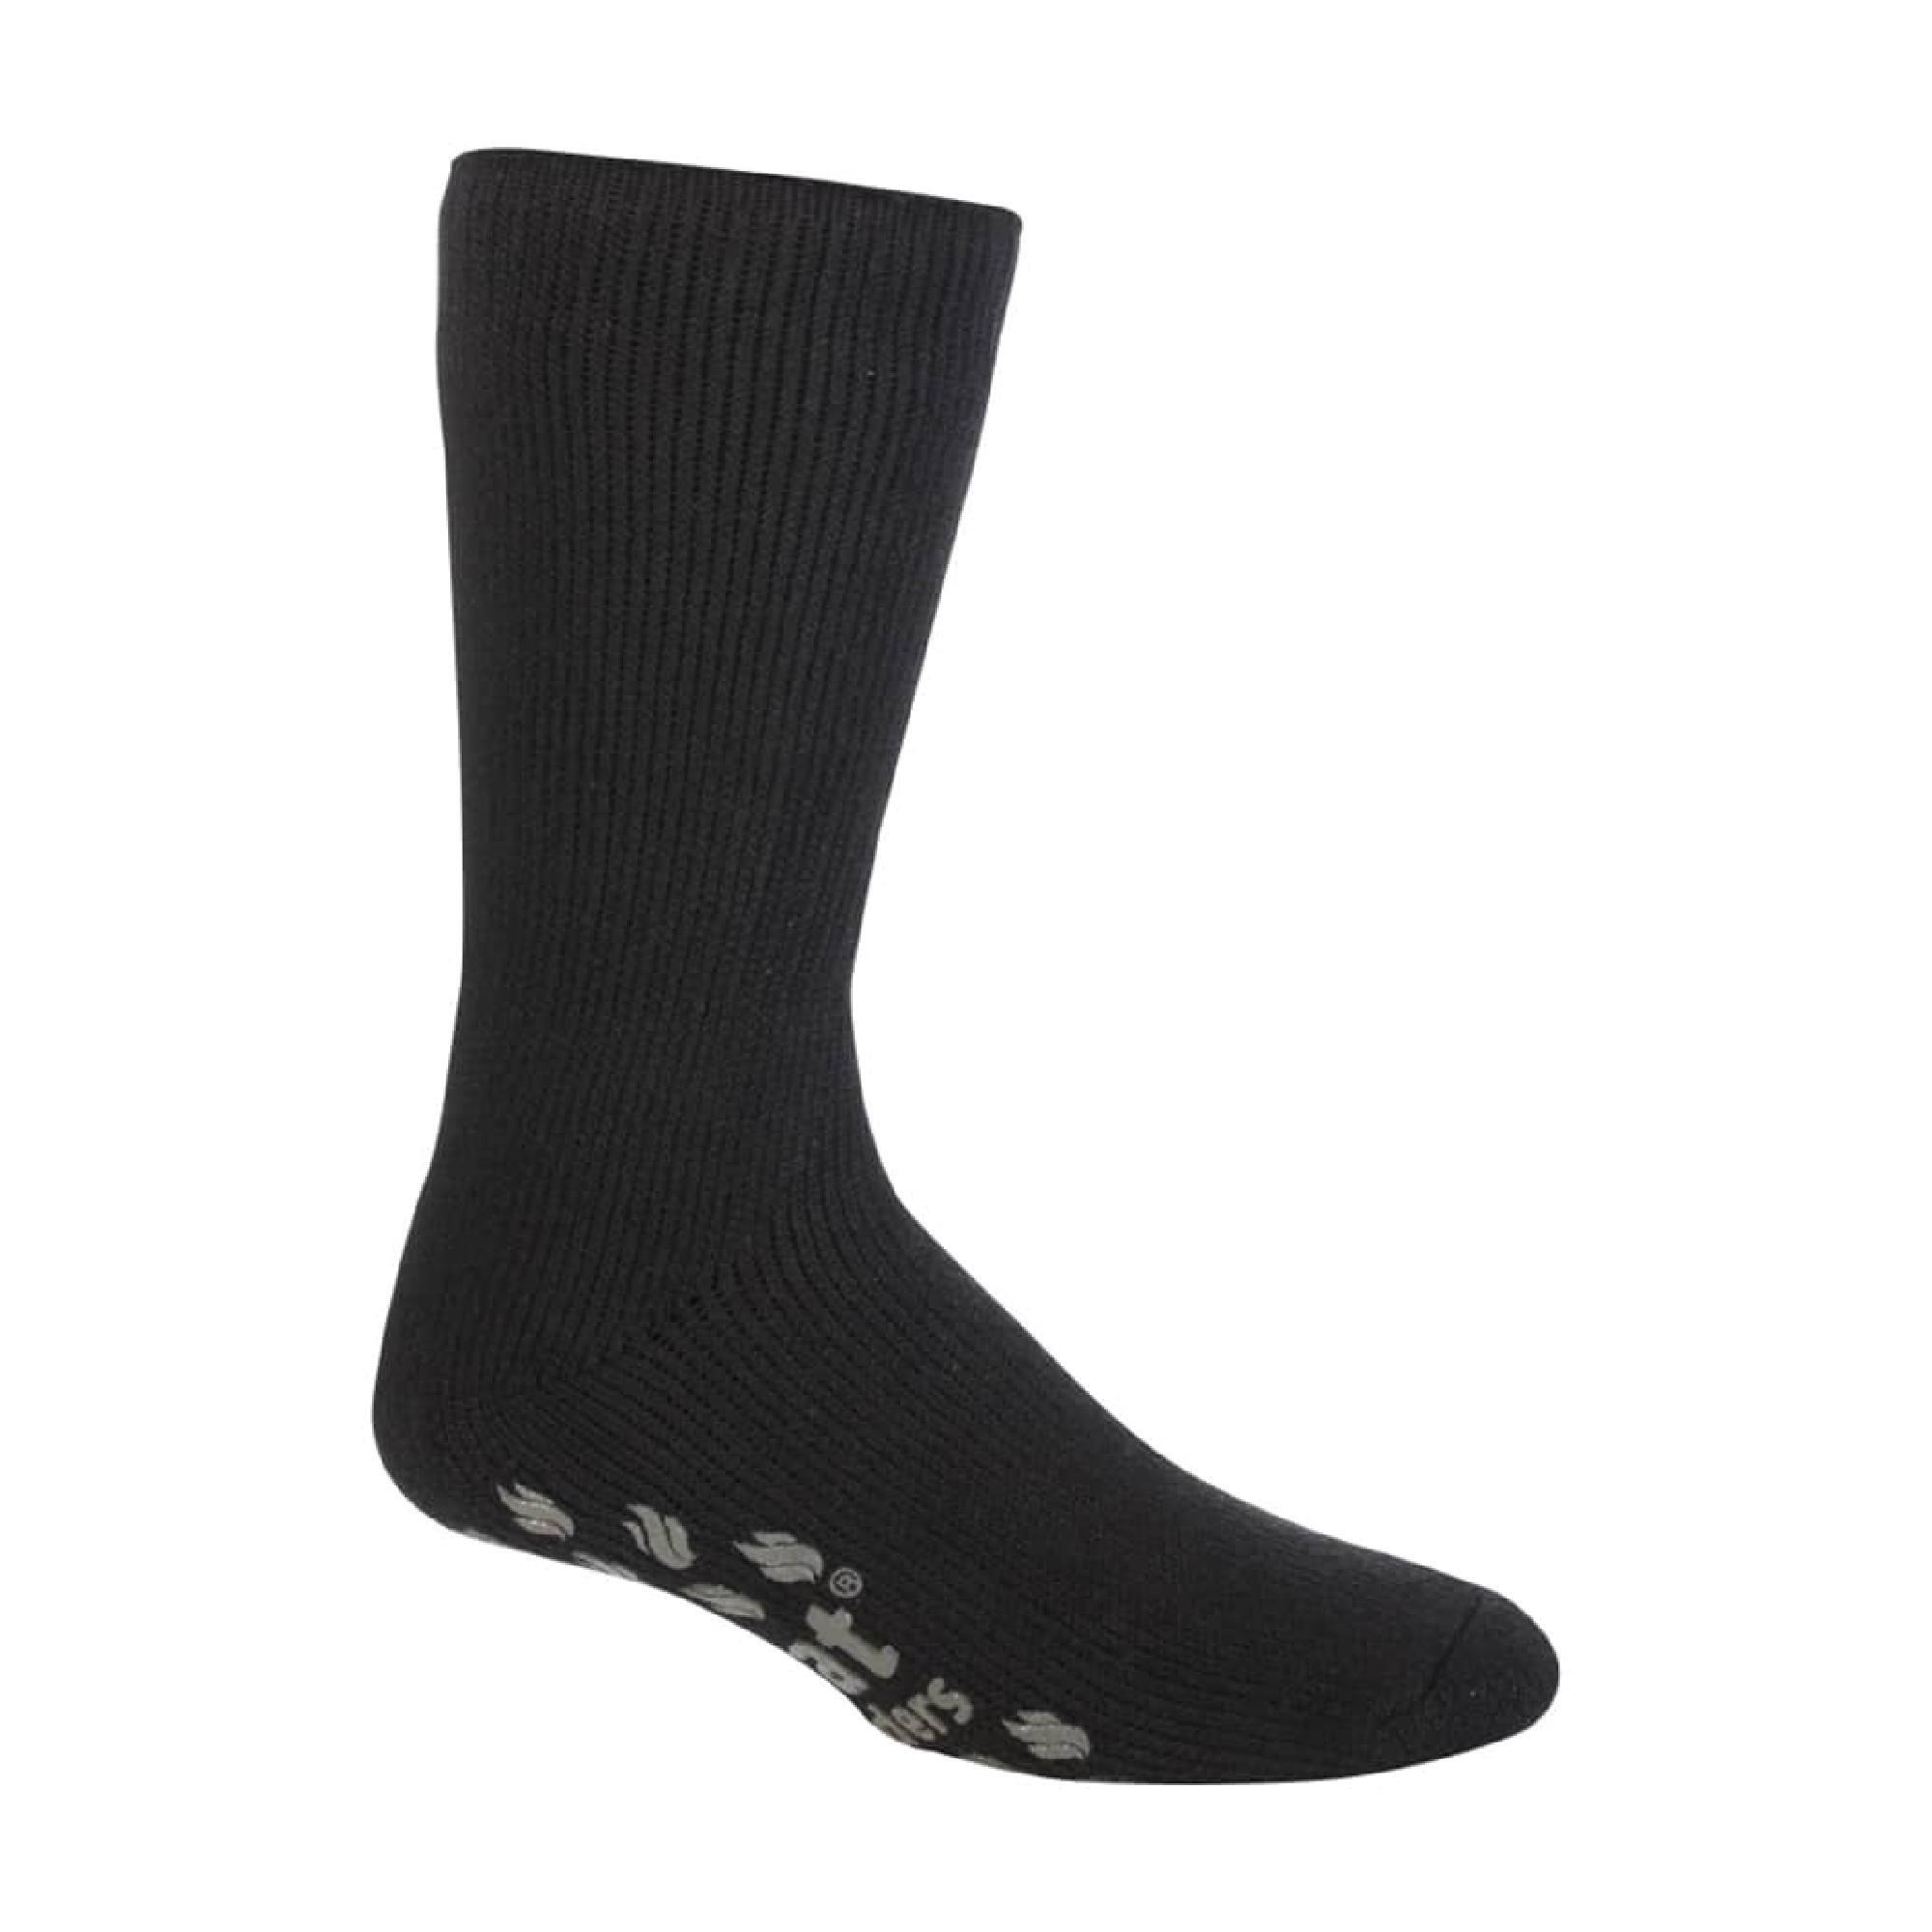 Mens Winter Non Slip Warm Thermal Slipper Socks with Grips 1/4